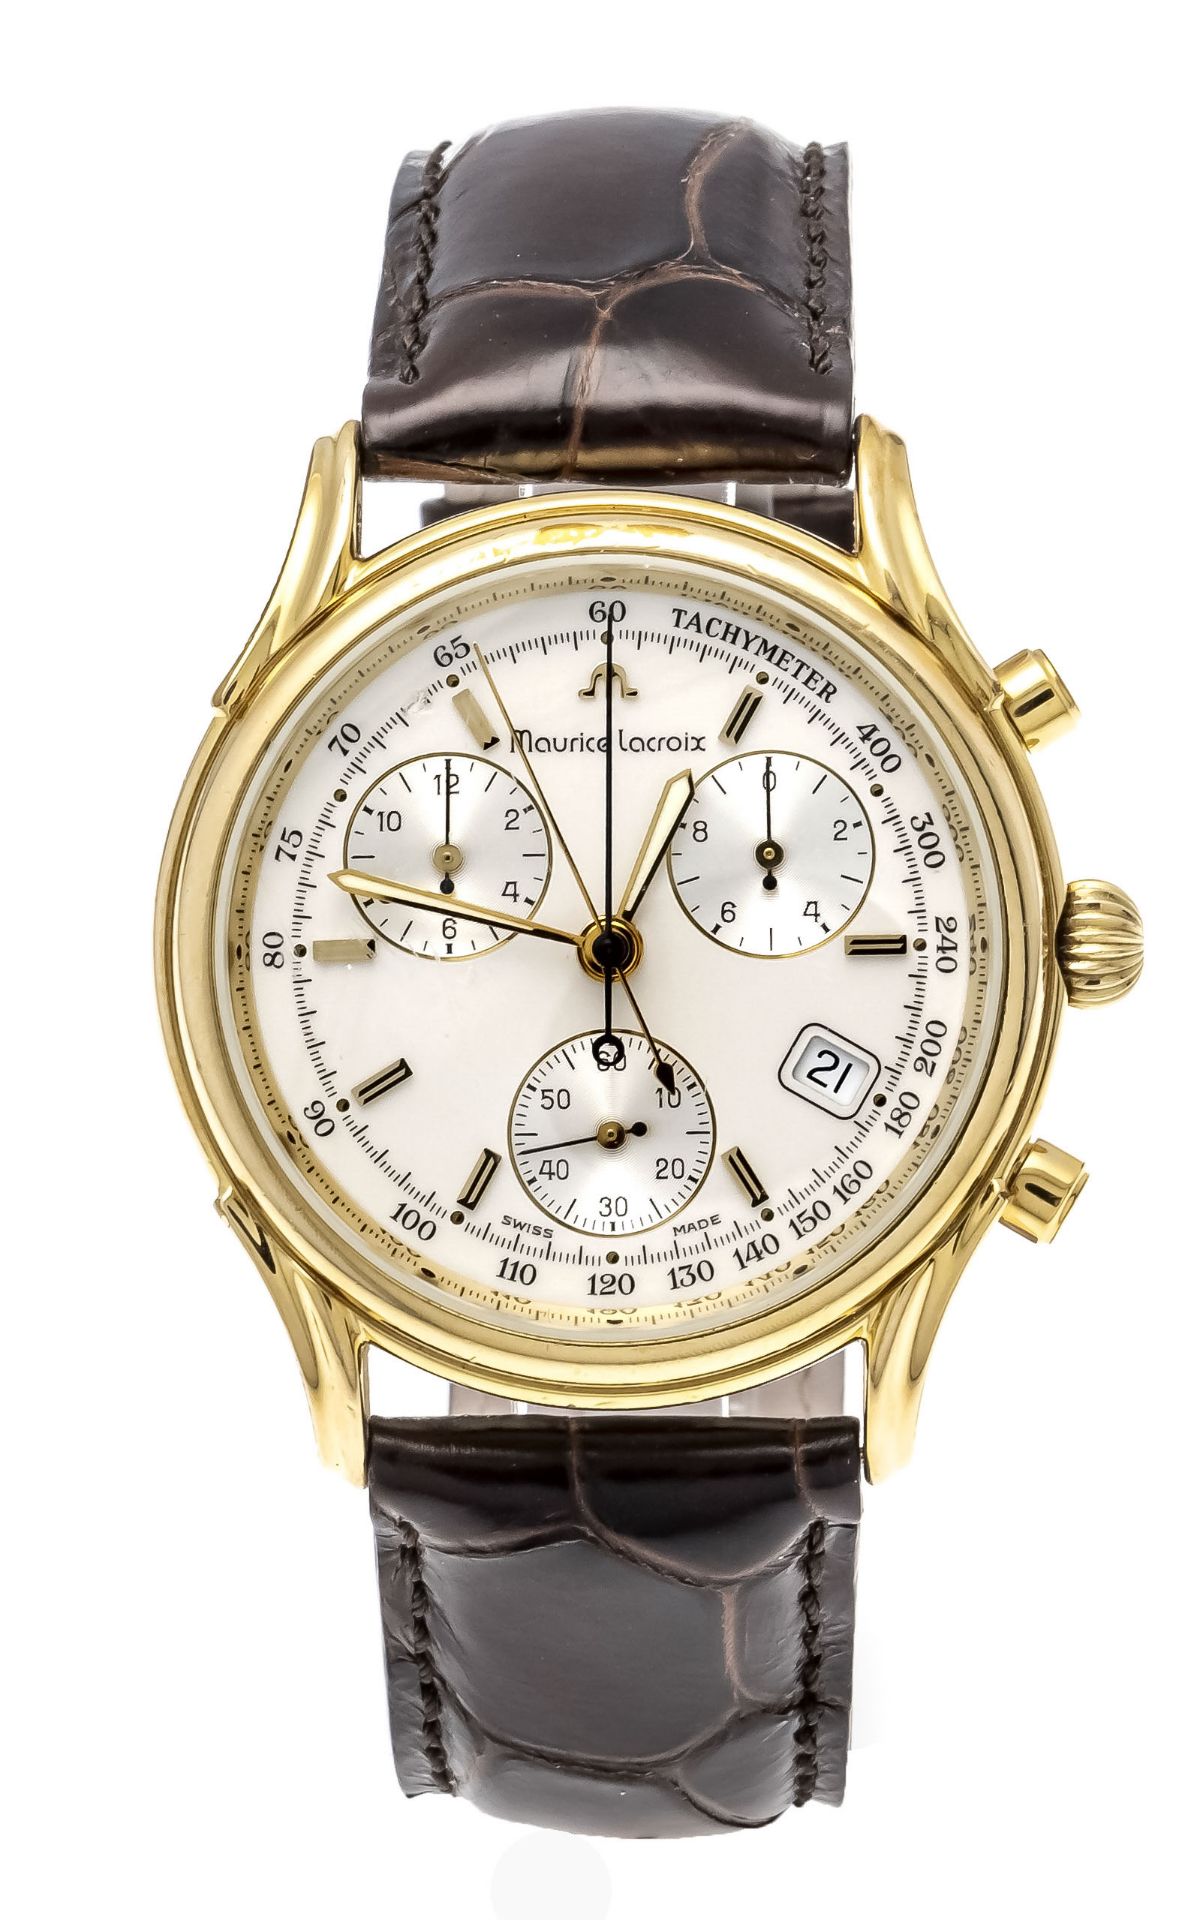 Maurice Lacroix men's quartz watch with chronograph and split-seconds hand, circa 1990, gold-